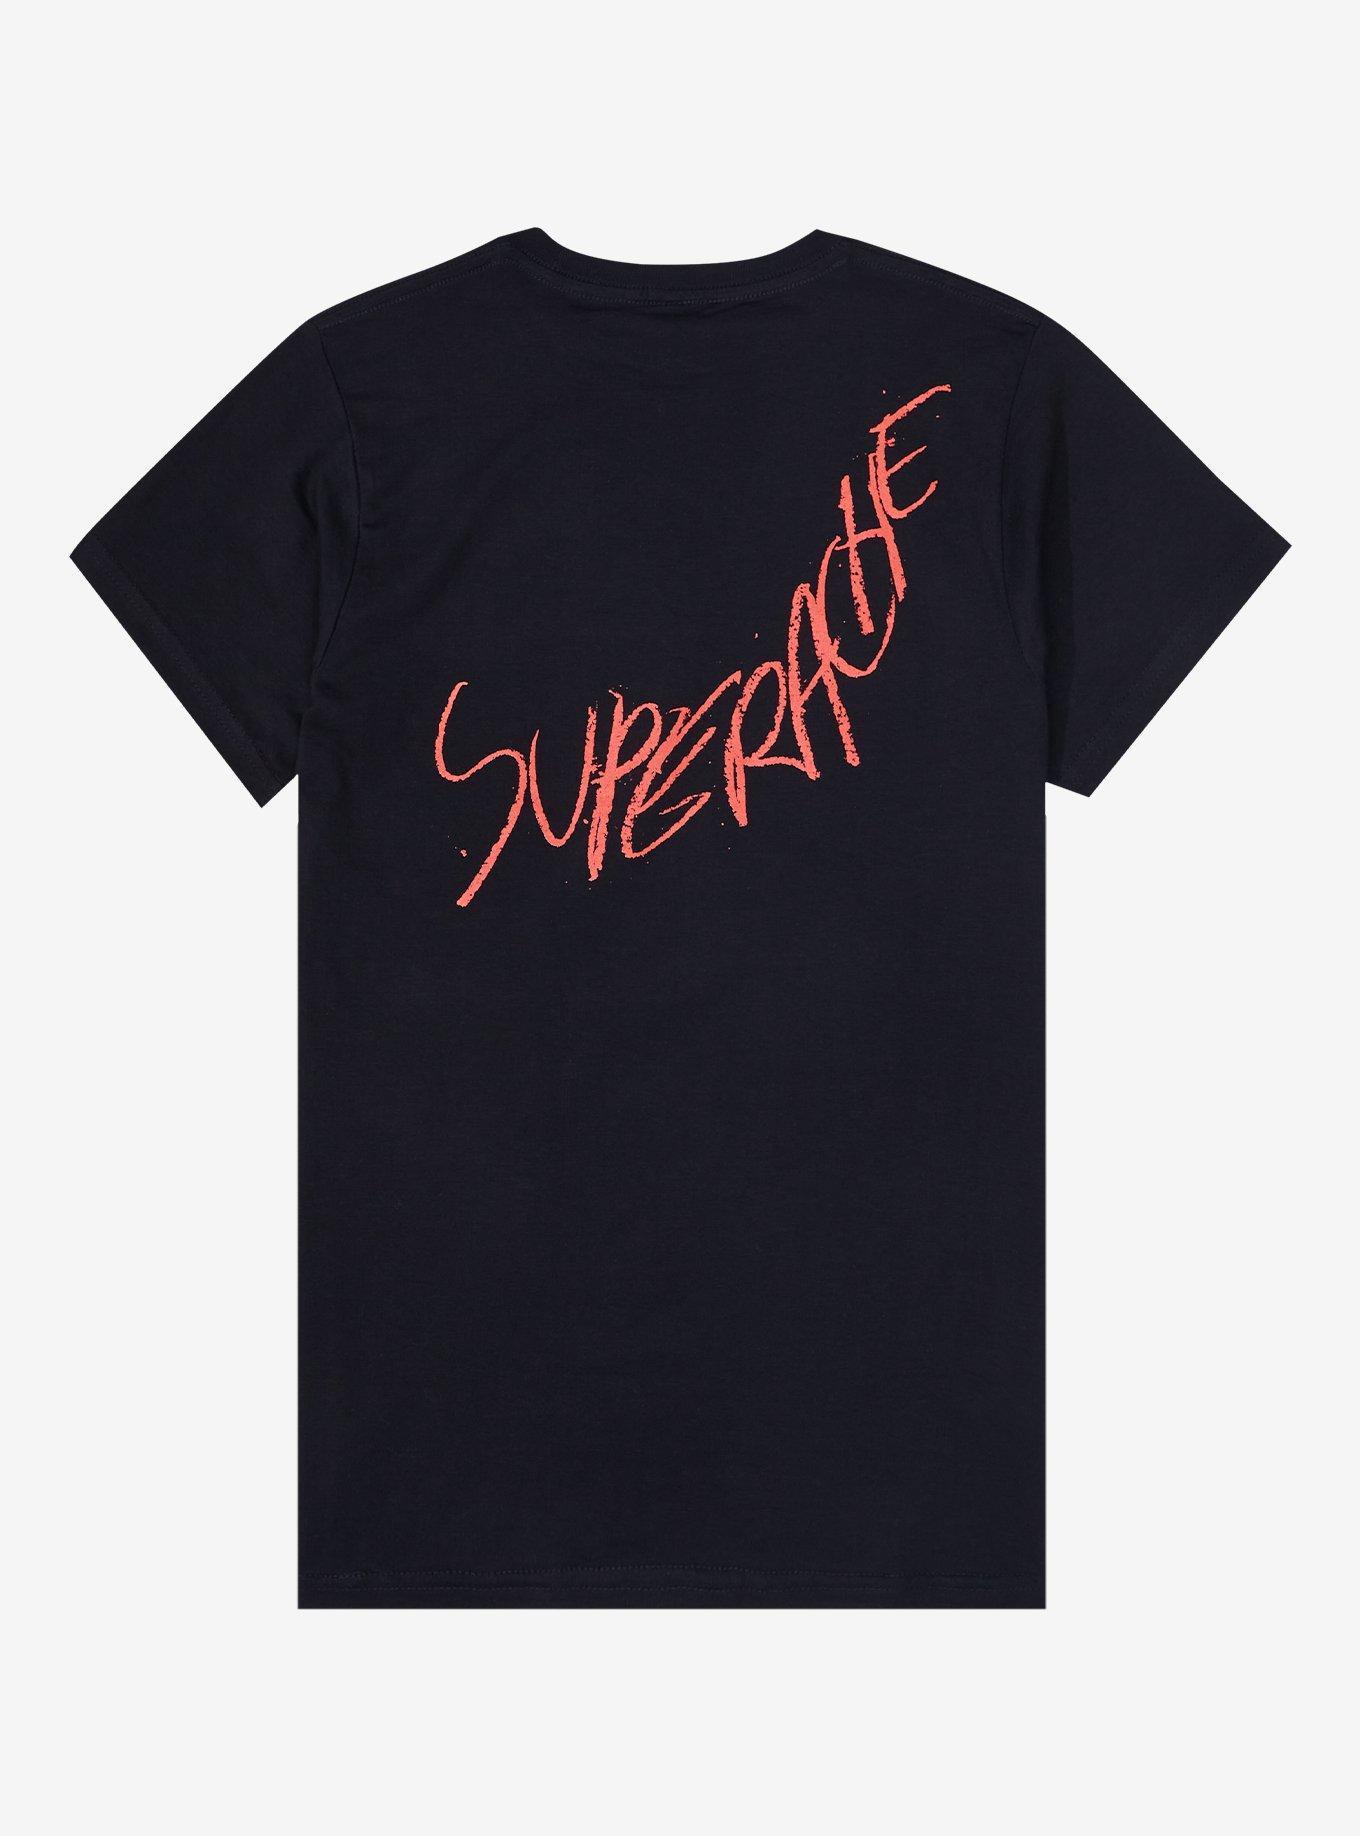 Conan Gray Superache Album Cover Boyfriend Fit Girls T-Shirt, BLACK, alternate